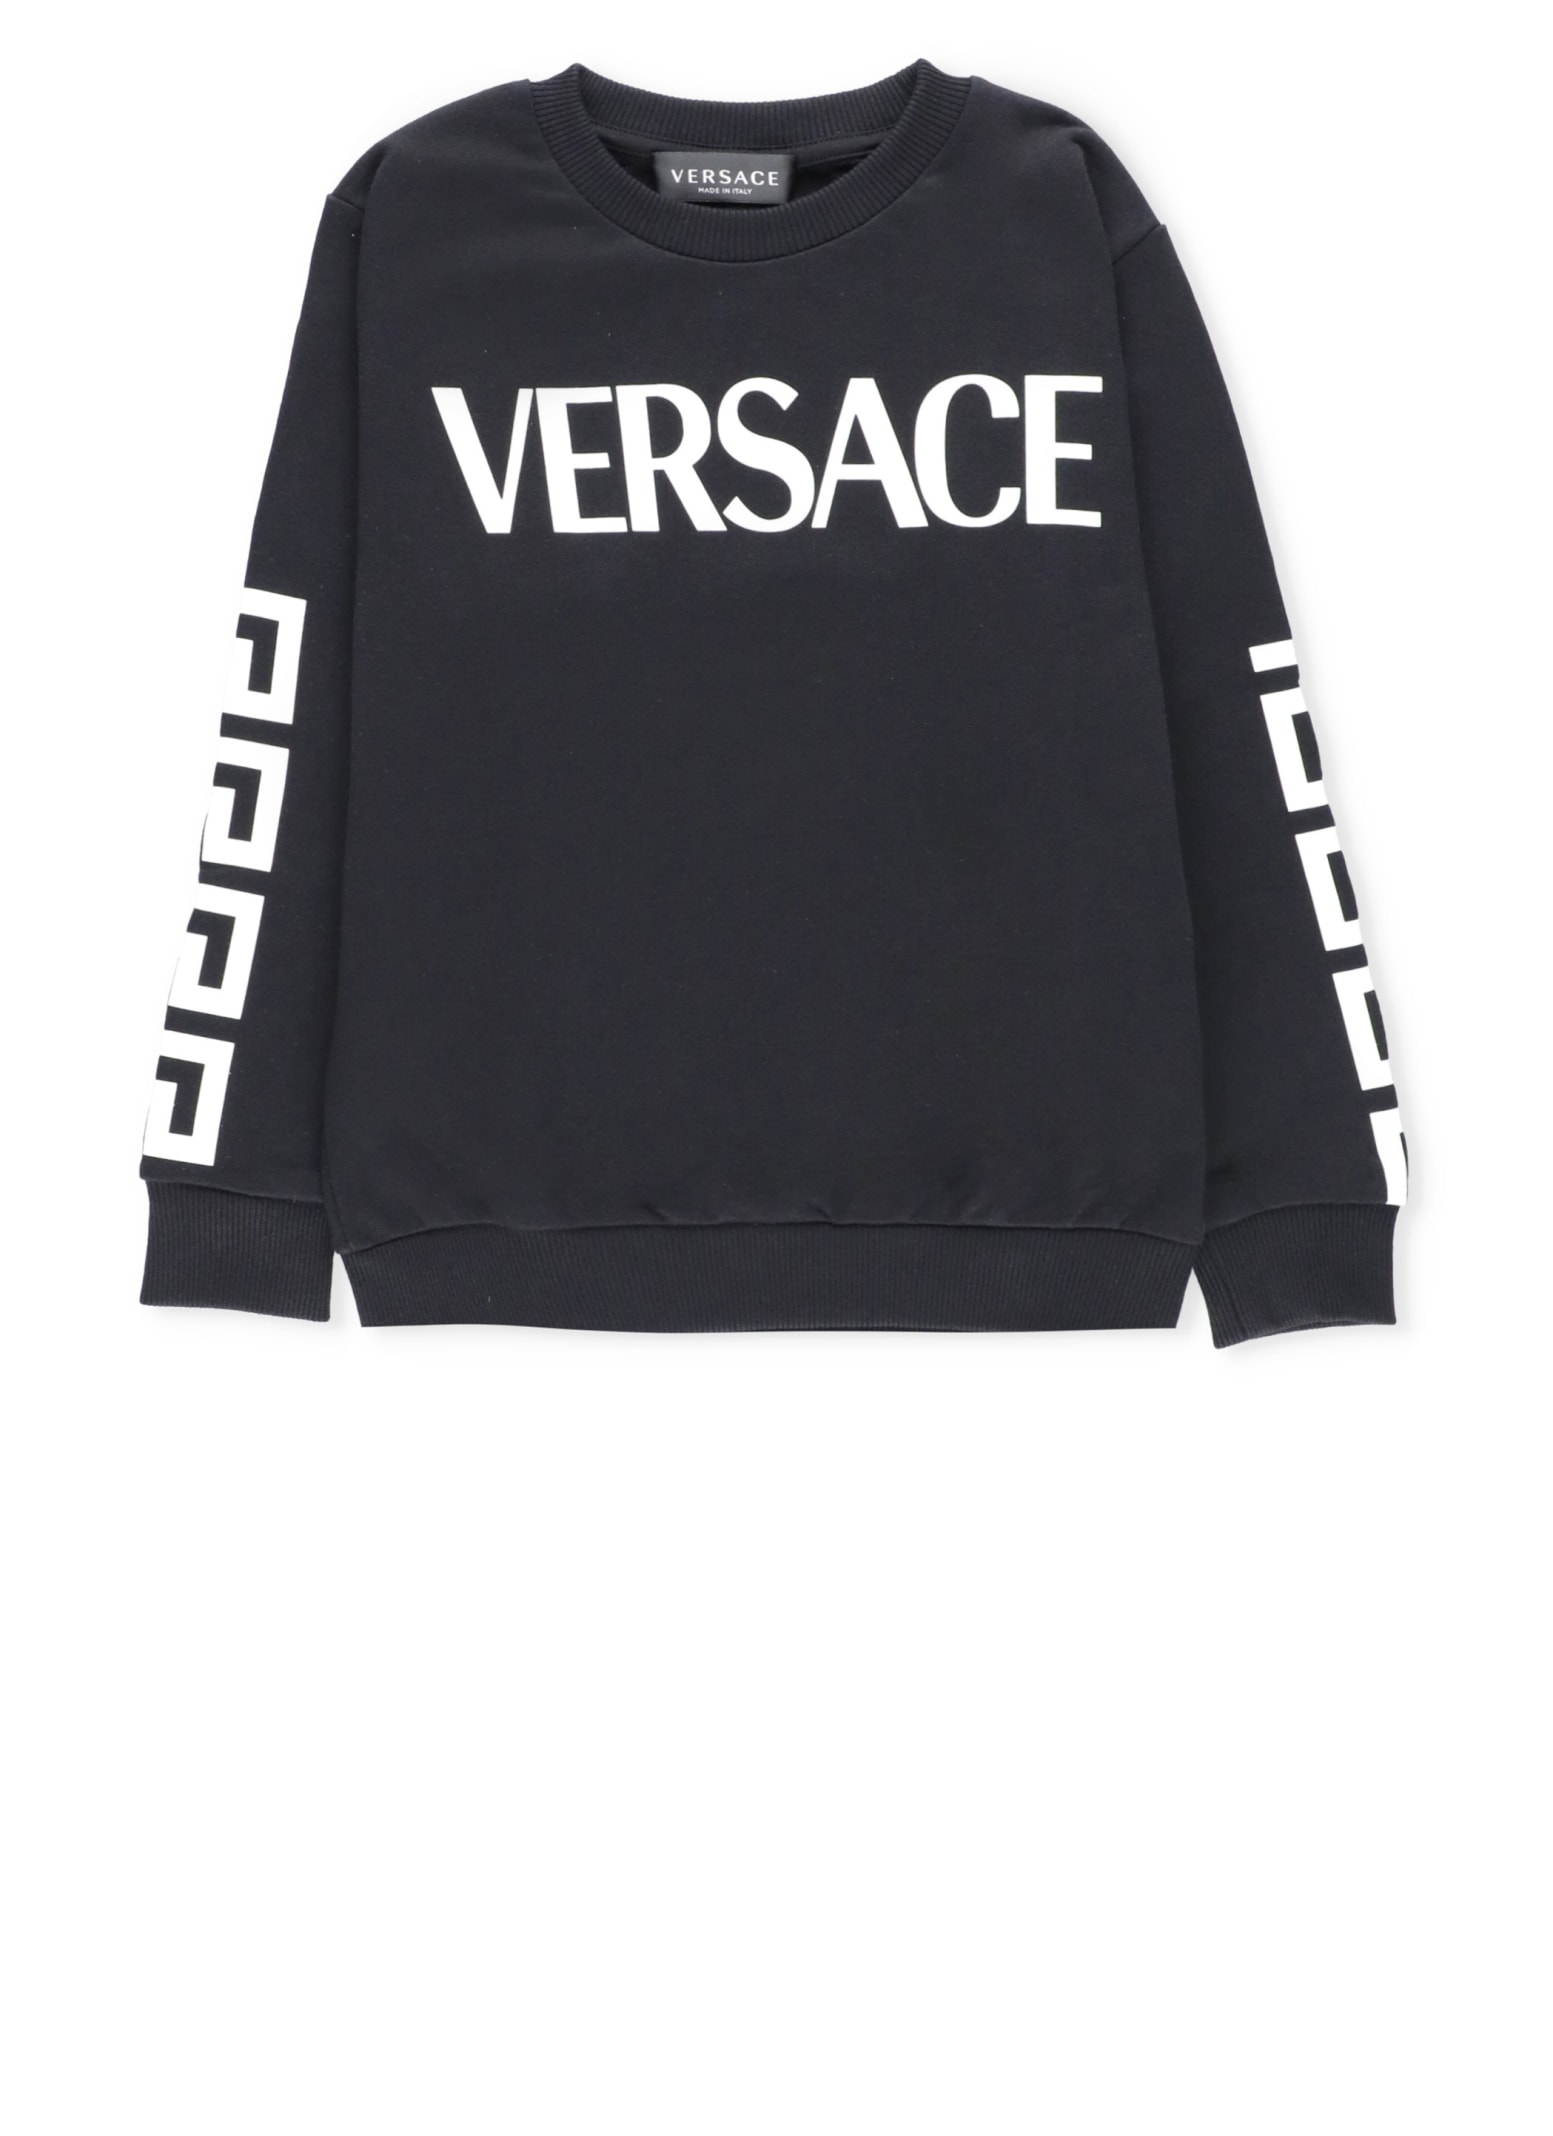 Versace Sweatshirt With Greek Print